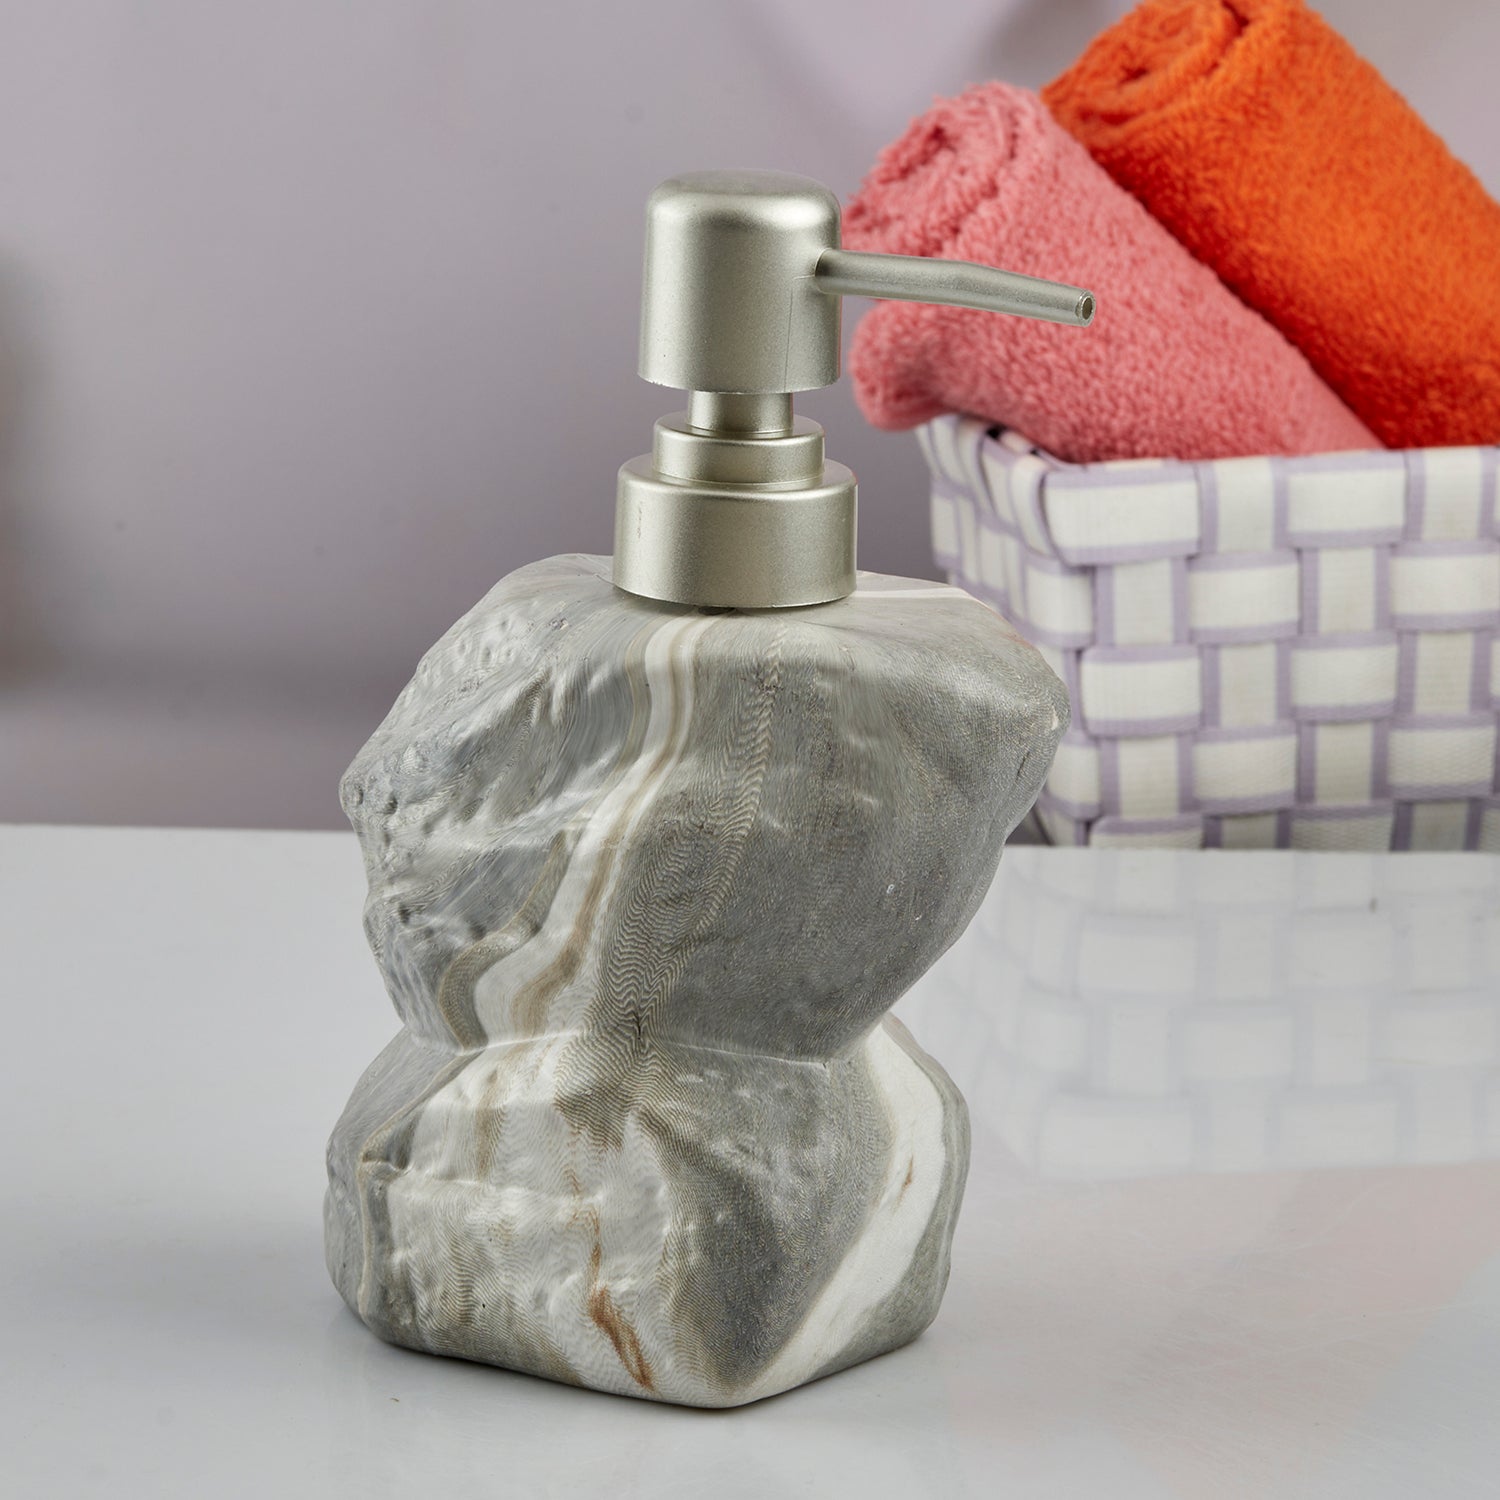 Ceramic Soap Dispenser Pump for Bathroom for Bath Gel, Lotion, Shampoo (7617)